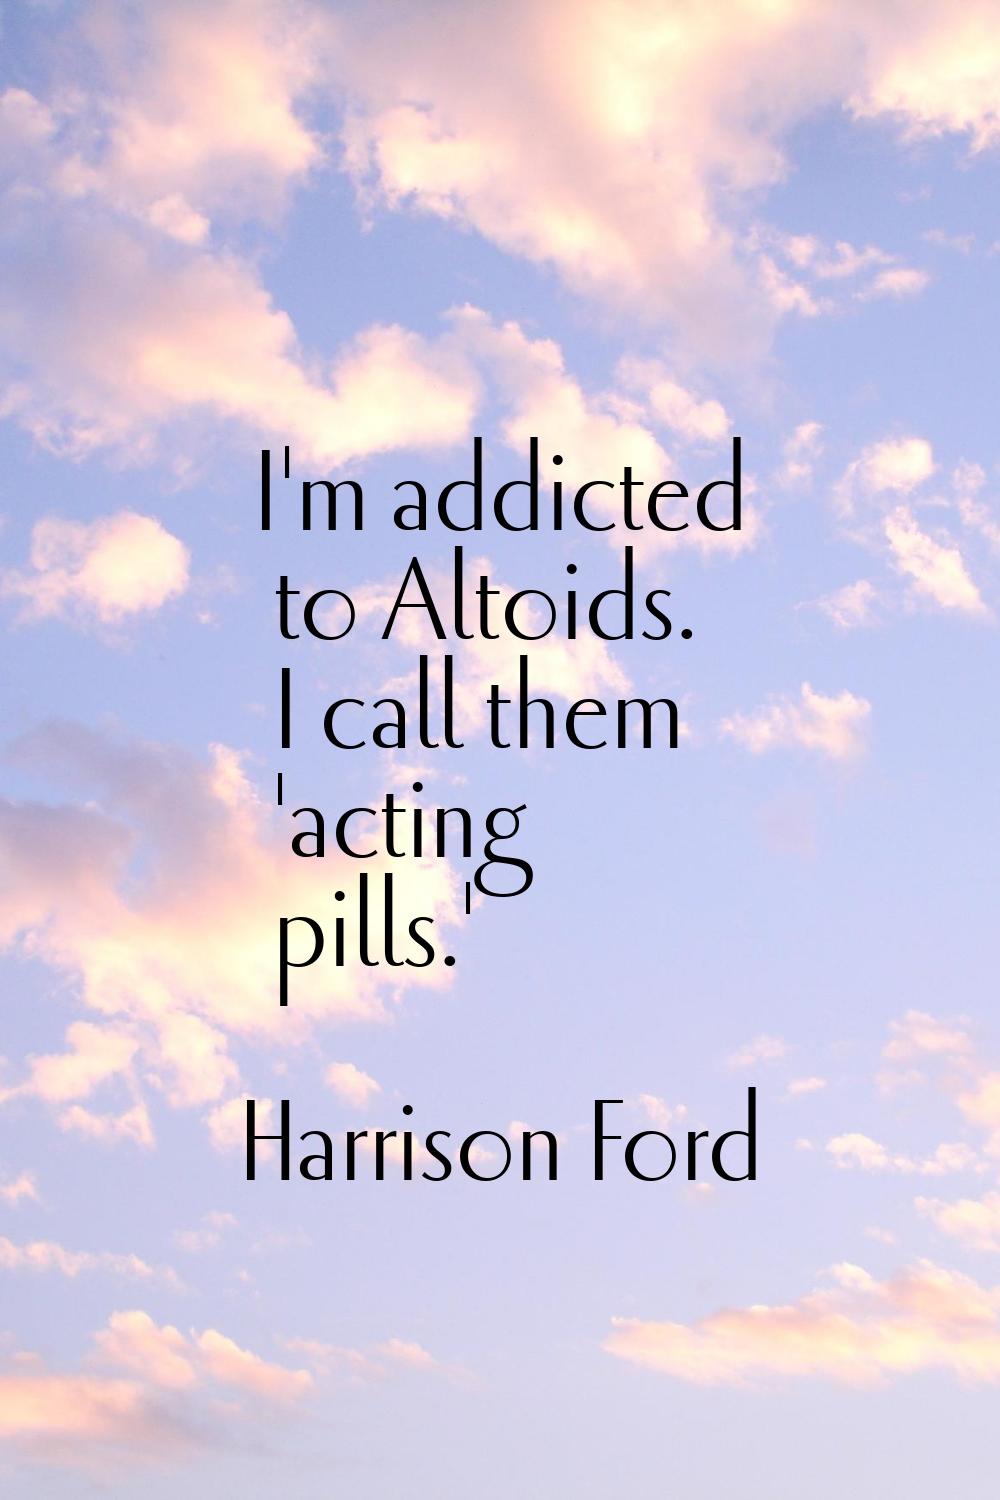 I'm addicted to Altoids. I call them 'acting pills.'